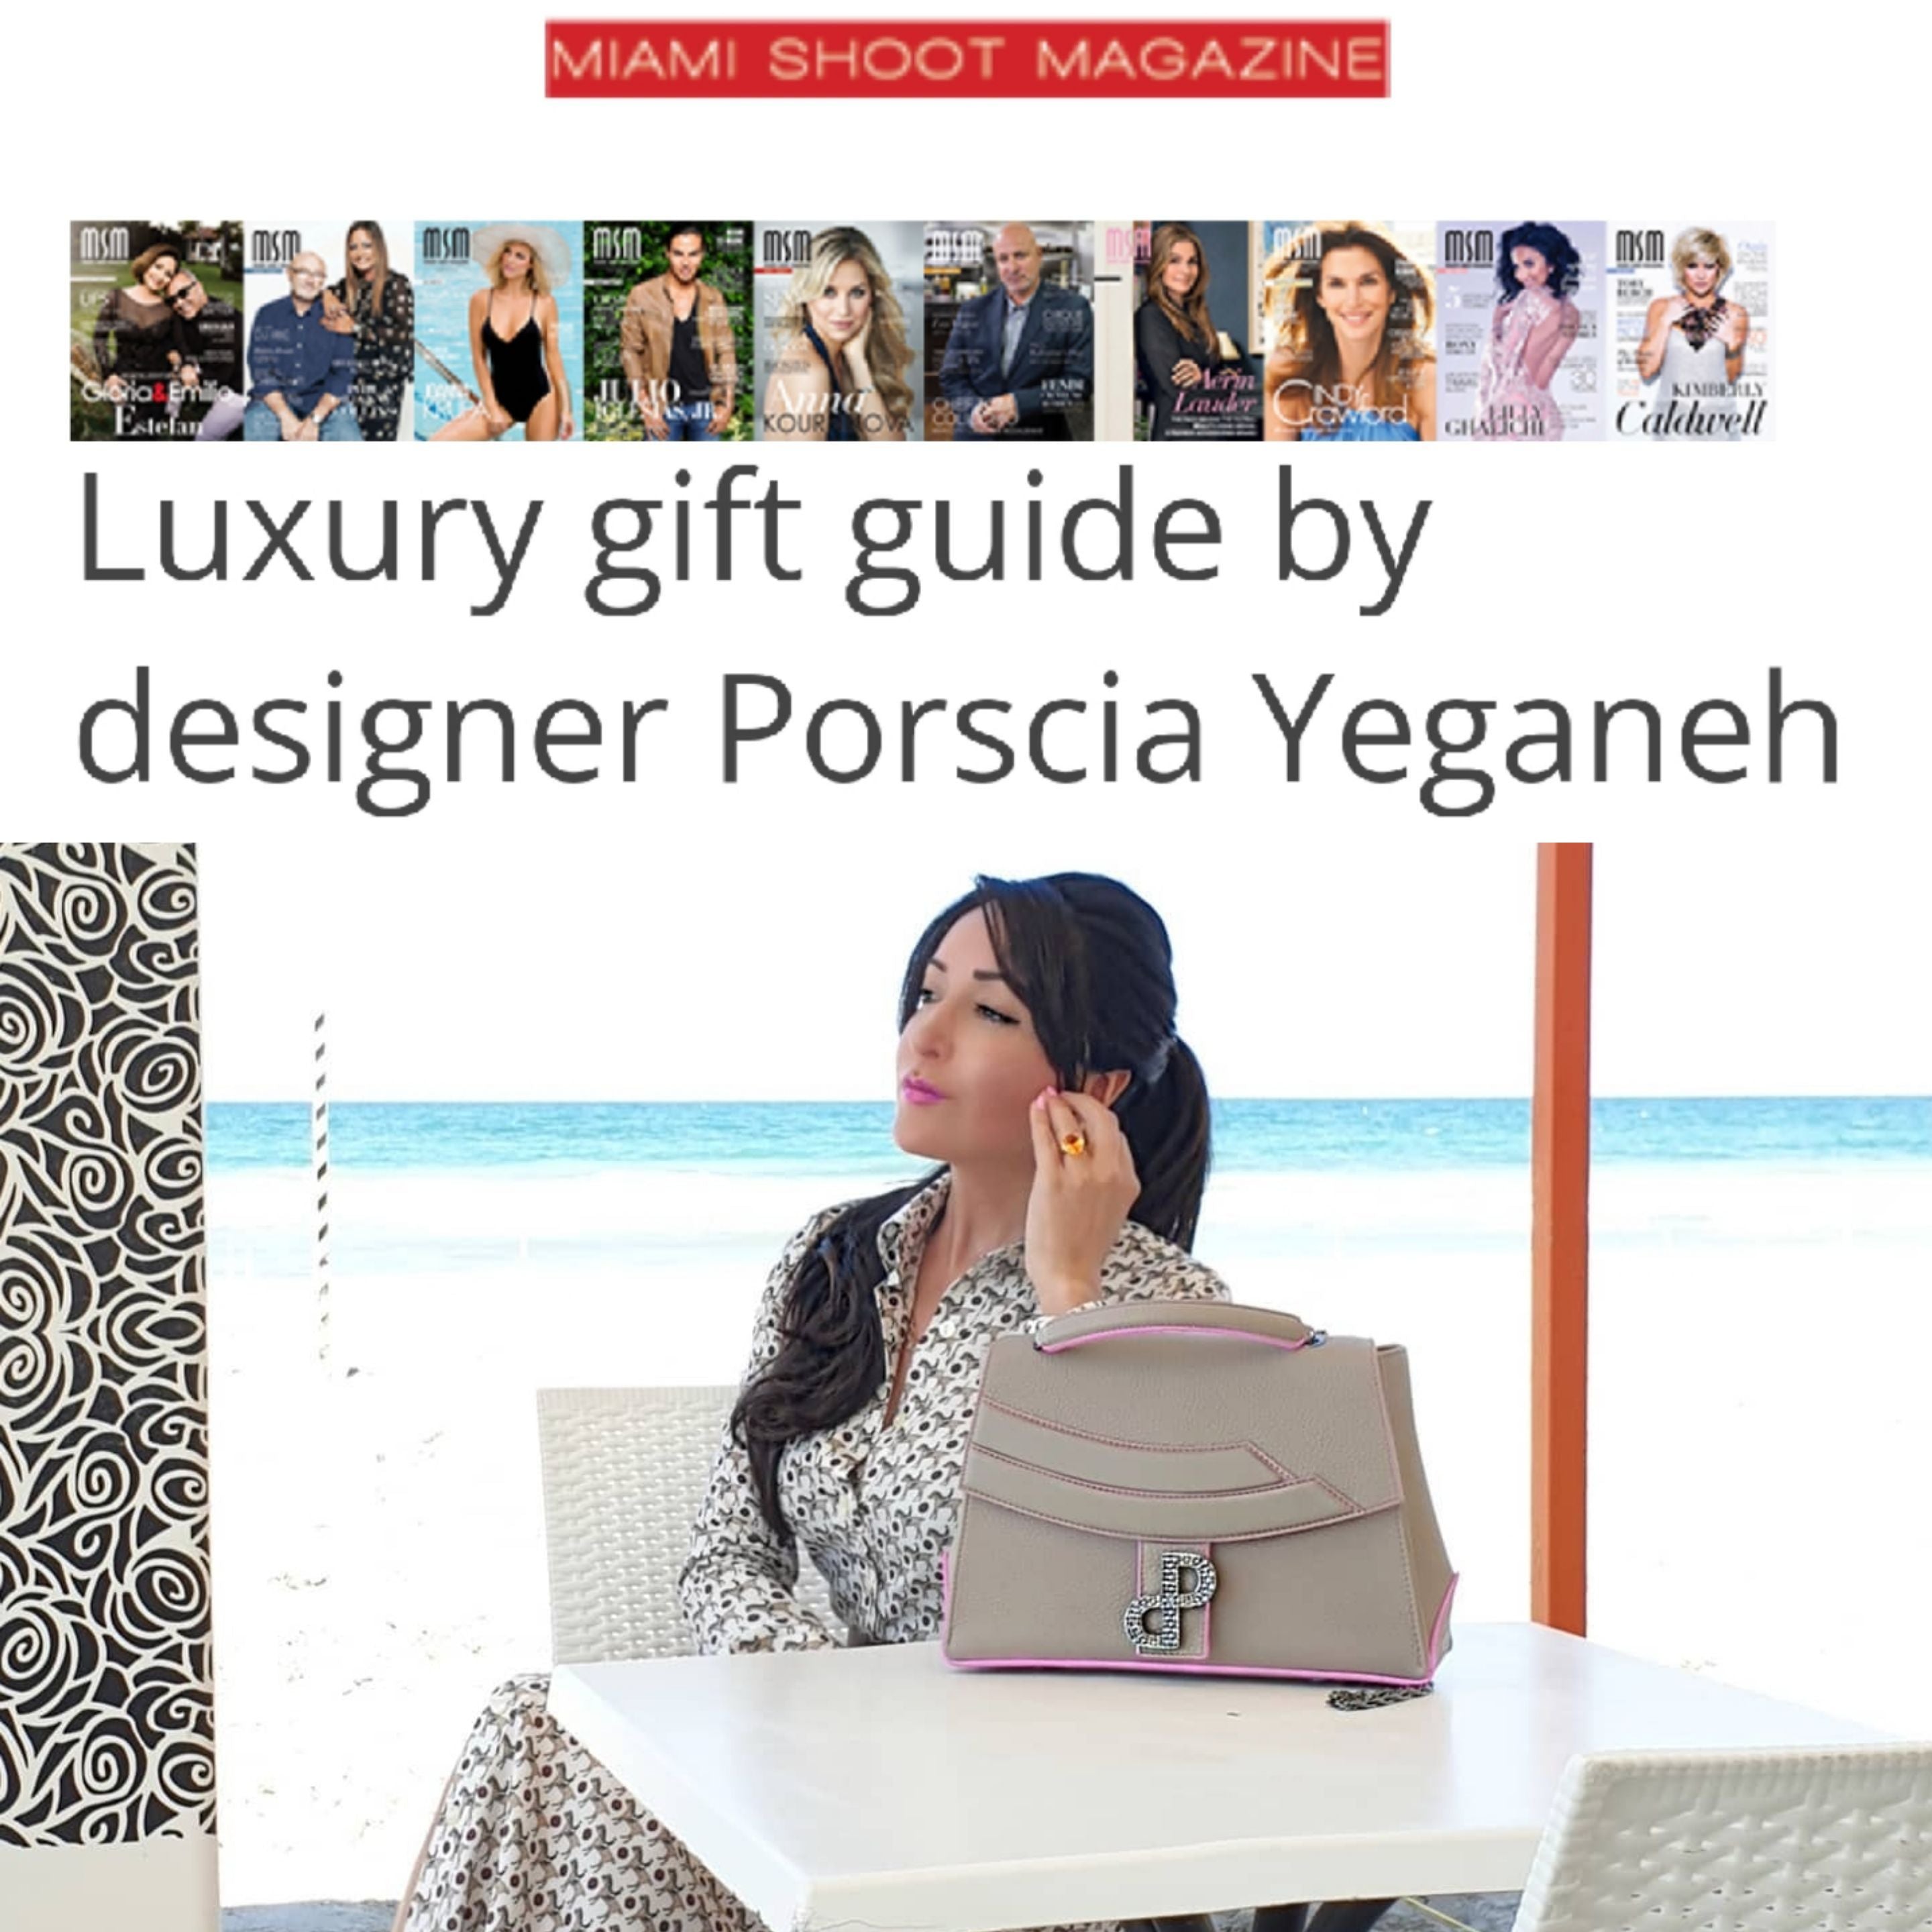 MIAMI - Luxury gift guide by designer Porscia Yeganeh